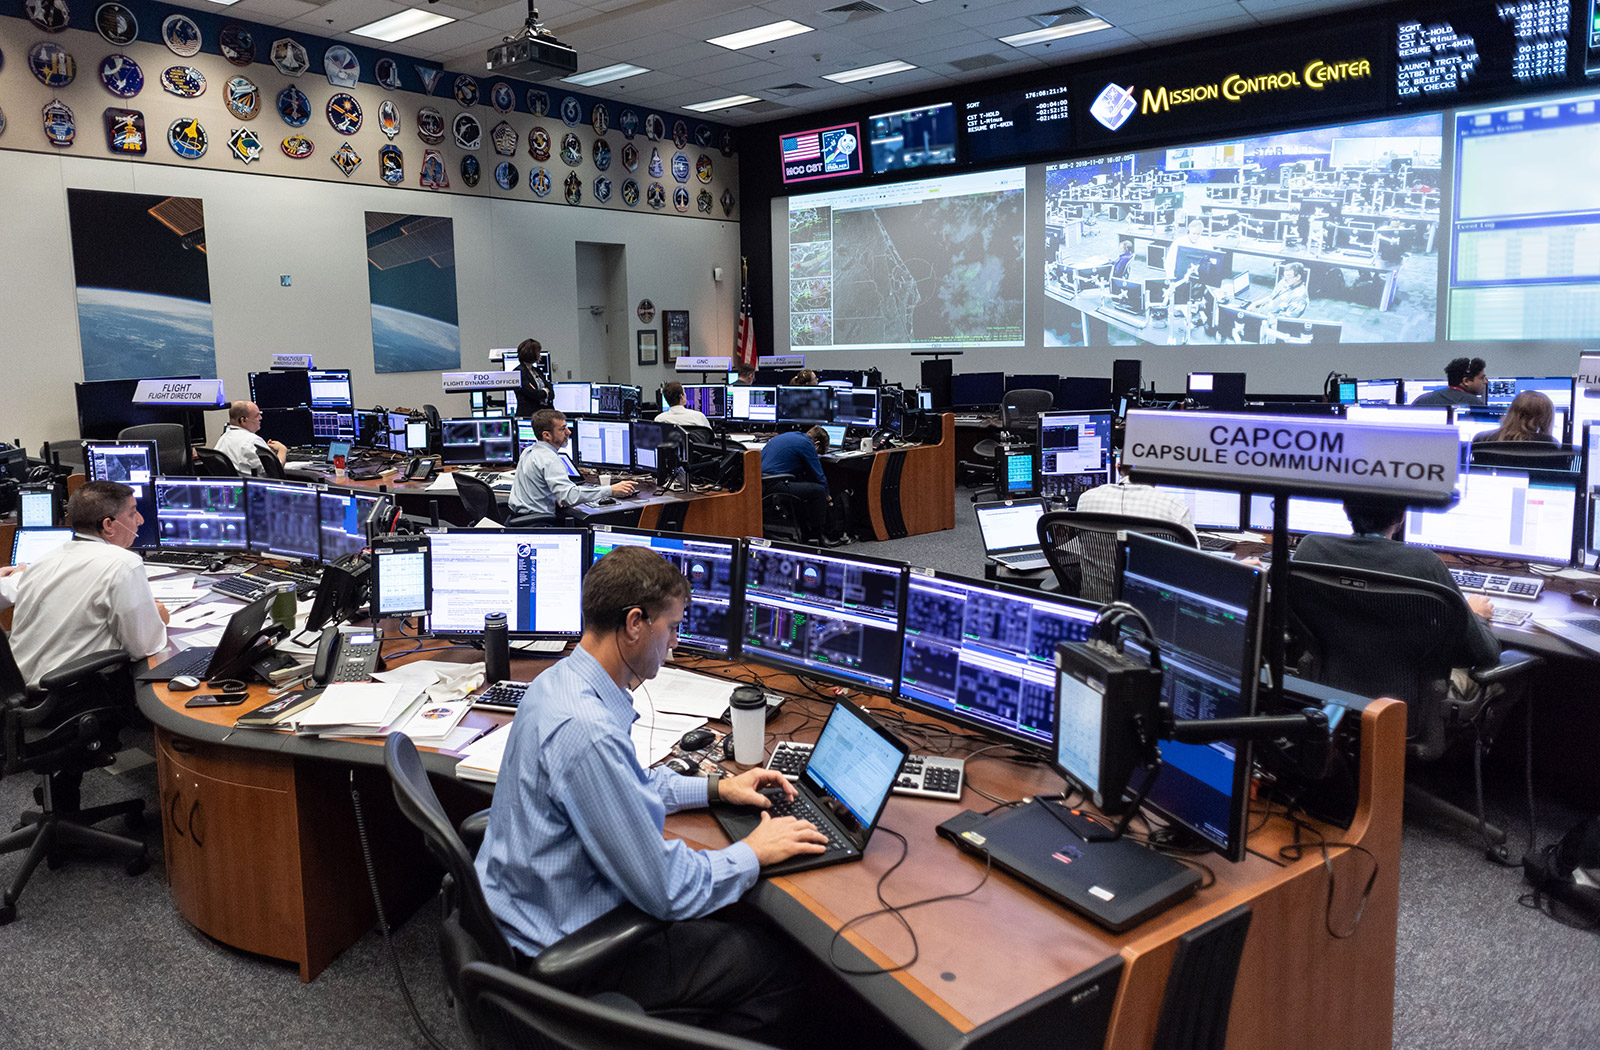 Mission control room.